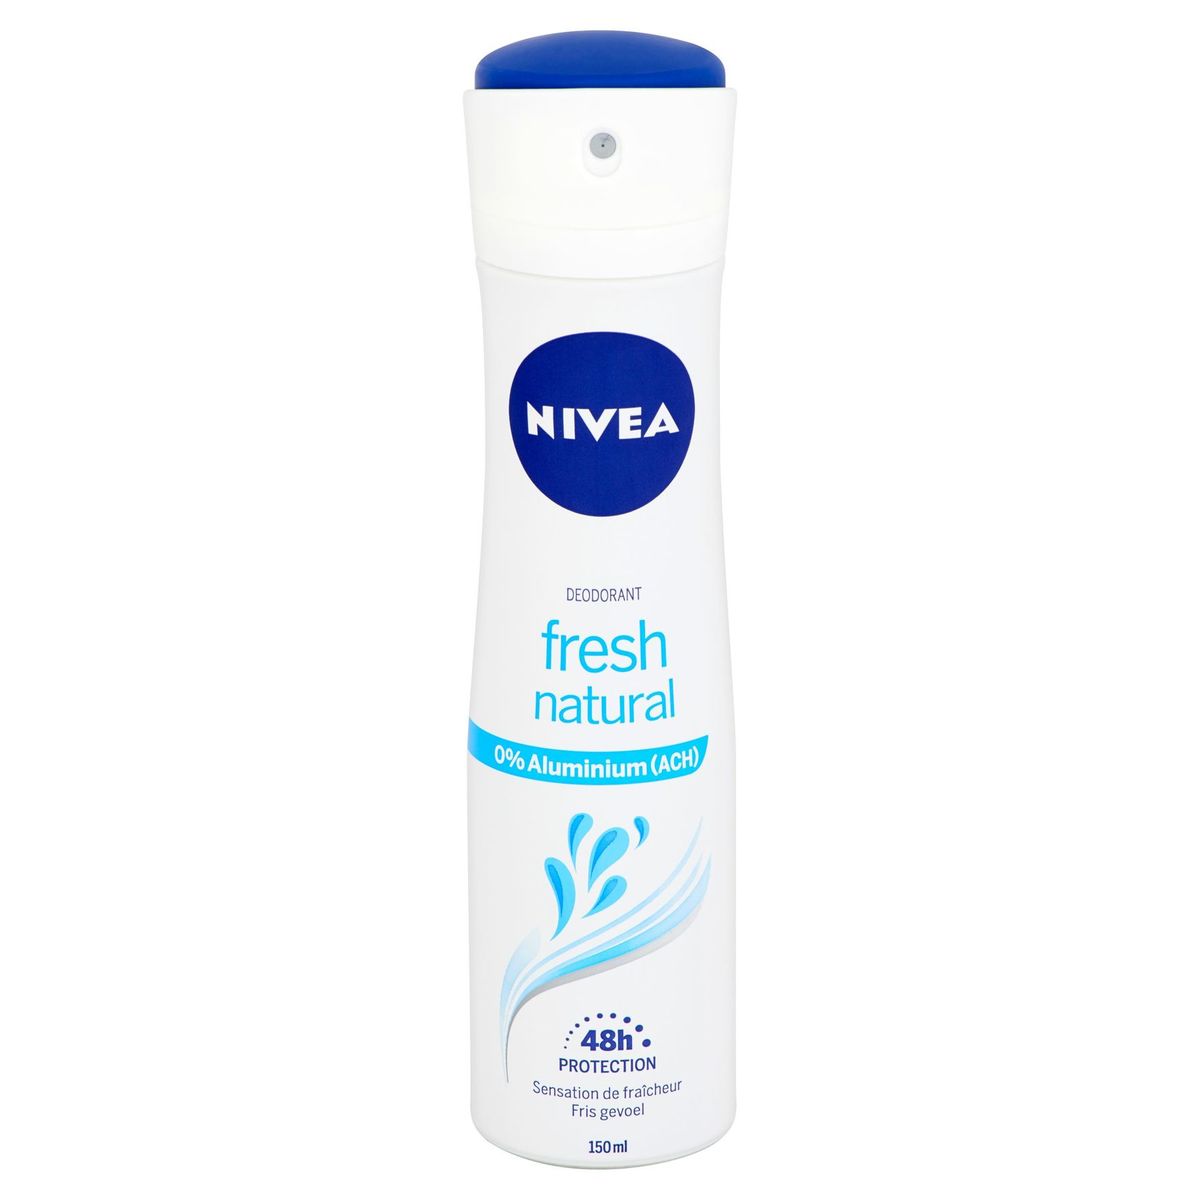 Nivea Deodorant Fresh Natural 48h Protection 150 ml